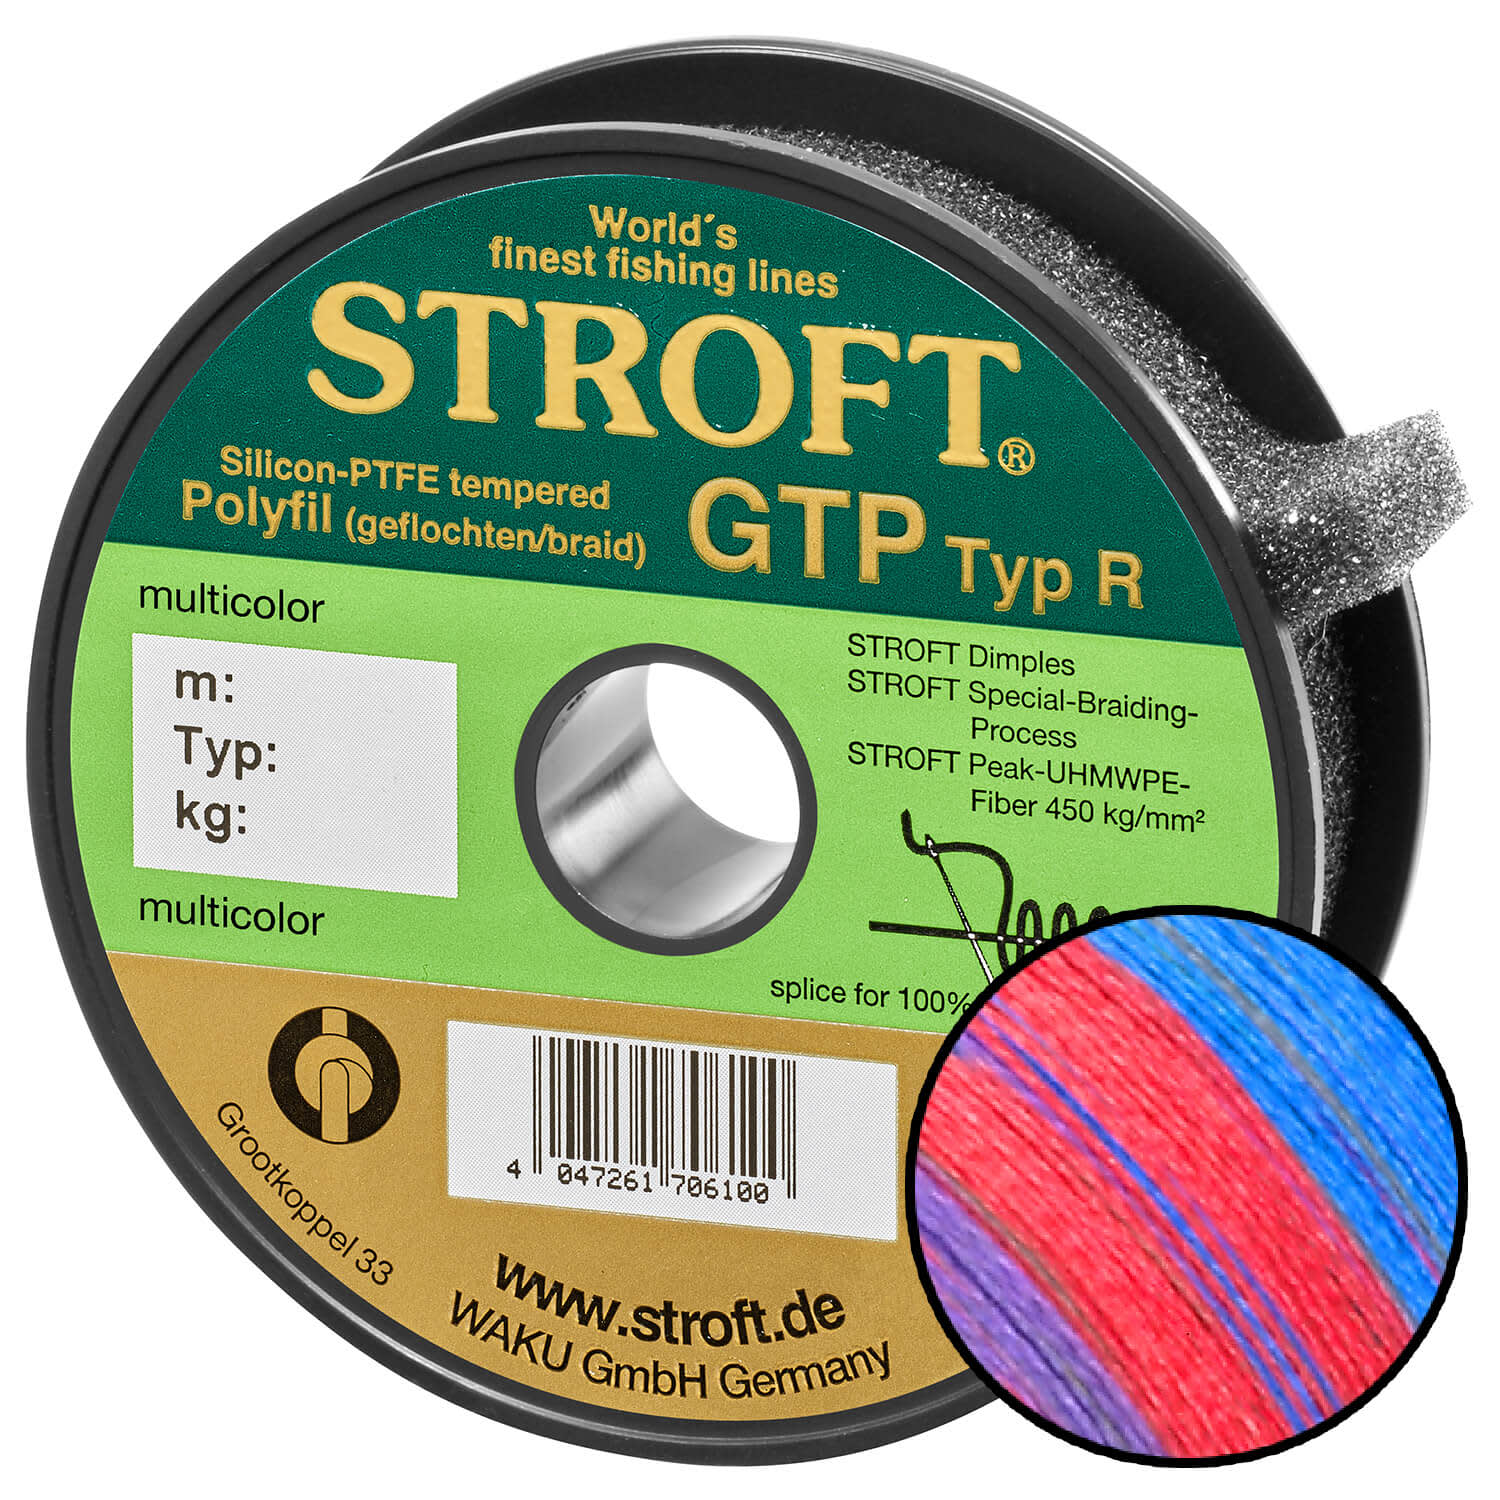 STROFT GTP Type R Braided Fishing Line 200m multicolour buy by Koeder Laden